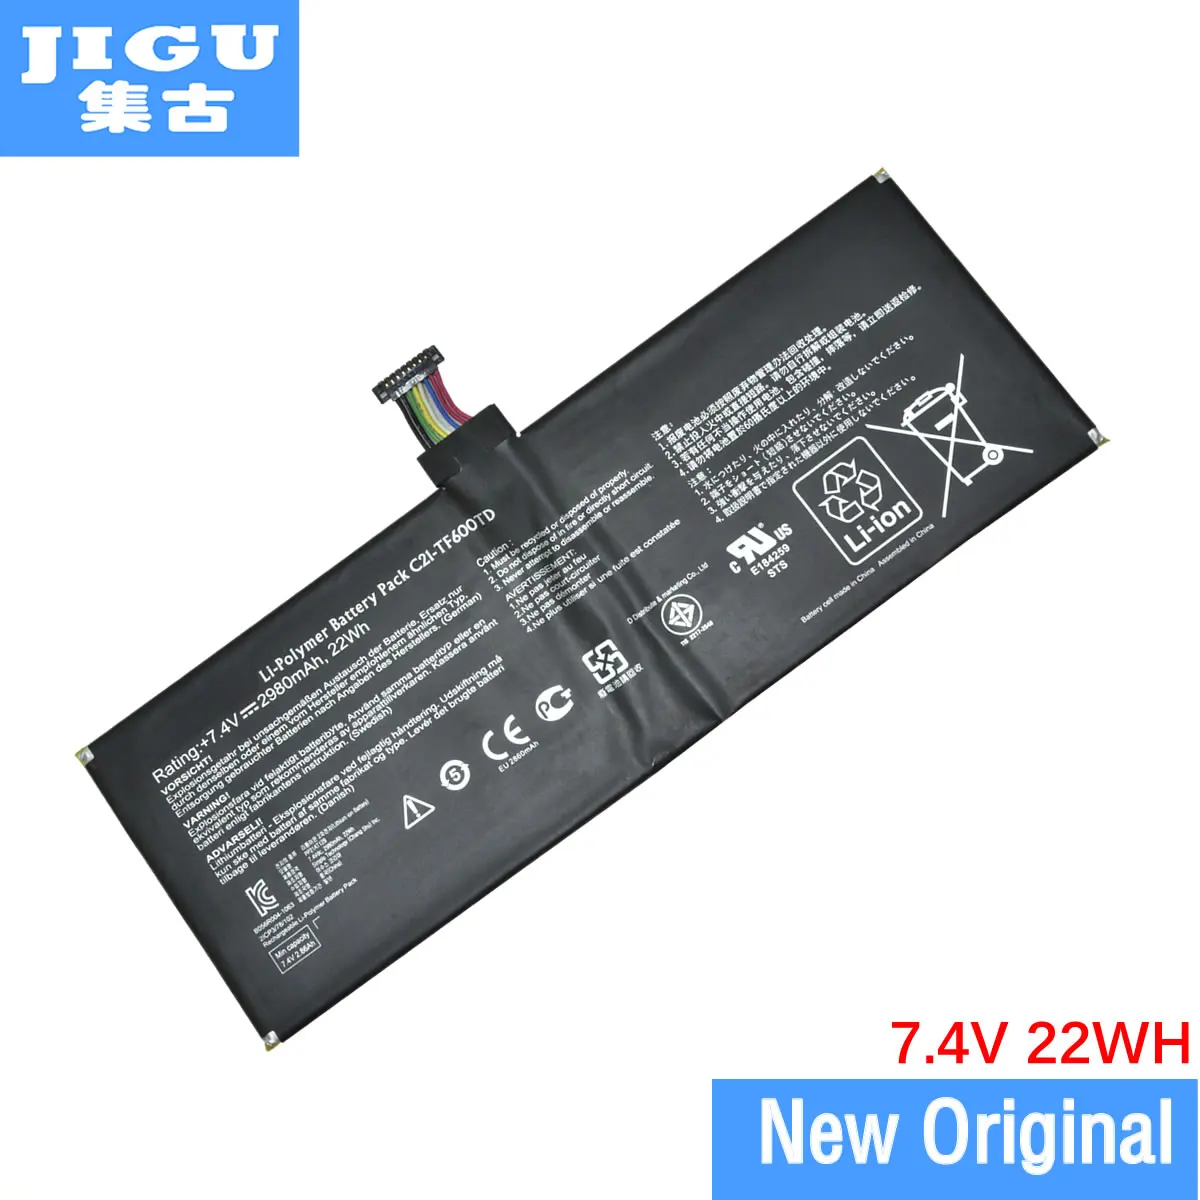 

JIGU C21-TF600TD Original laptop Battery For Asus TF600 TF502T TF600TG TF600TL FOR Vivo Tab TF6P00T 7.4V 22WH 2980MAH